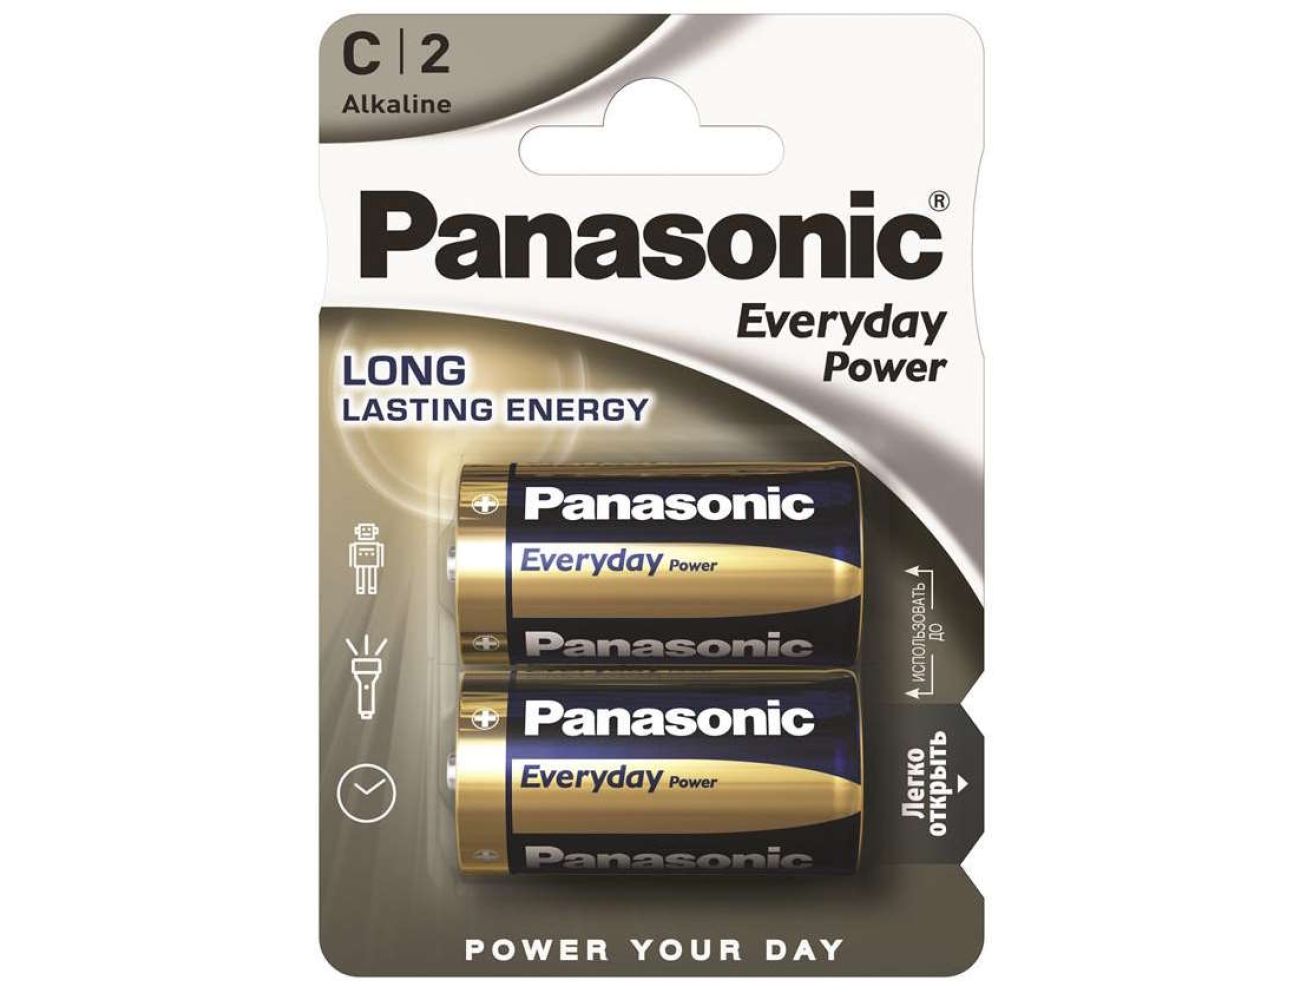 Батарейка LR14 Panasonic С Everyday Power 1.5V Alkaline 2 шт